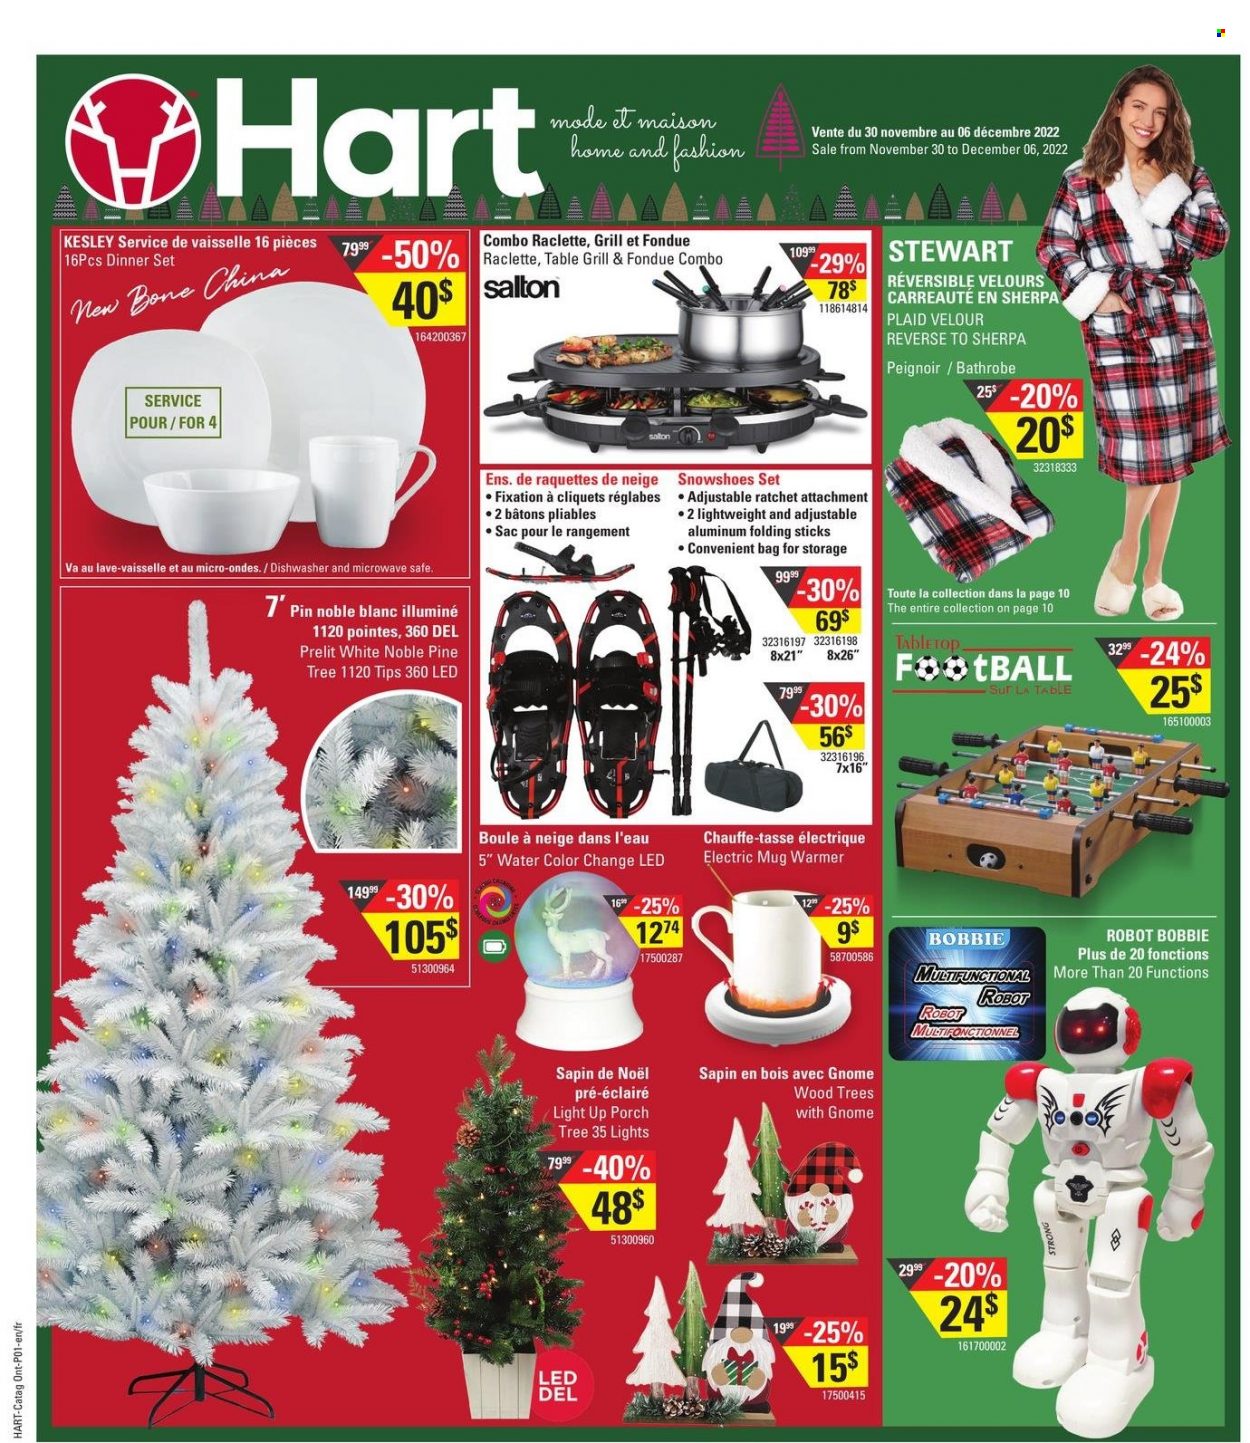 thumbnail - Hart Stores Flyer - November 30, 2022 - December 06, 2022 - Sales products - dinnerware set, mug, bag, pin, sherpa, grill, pine tree, bathrobe, robot. Page 1.